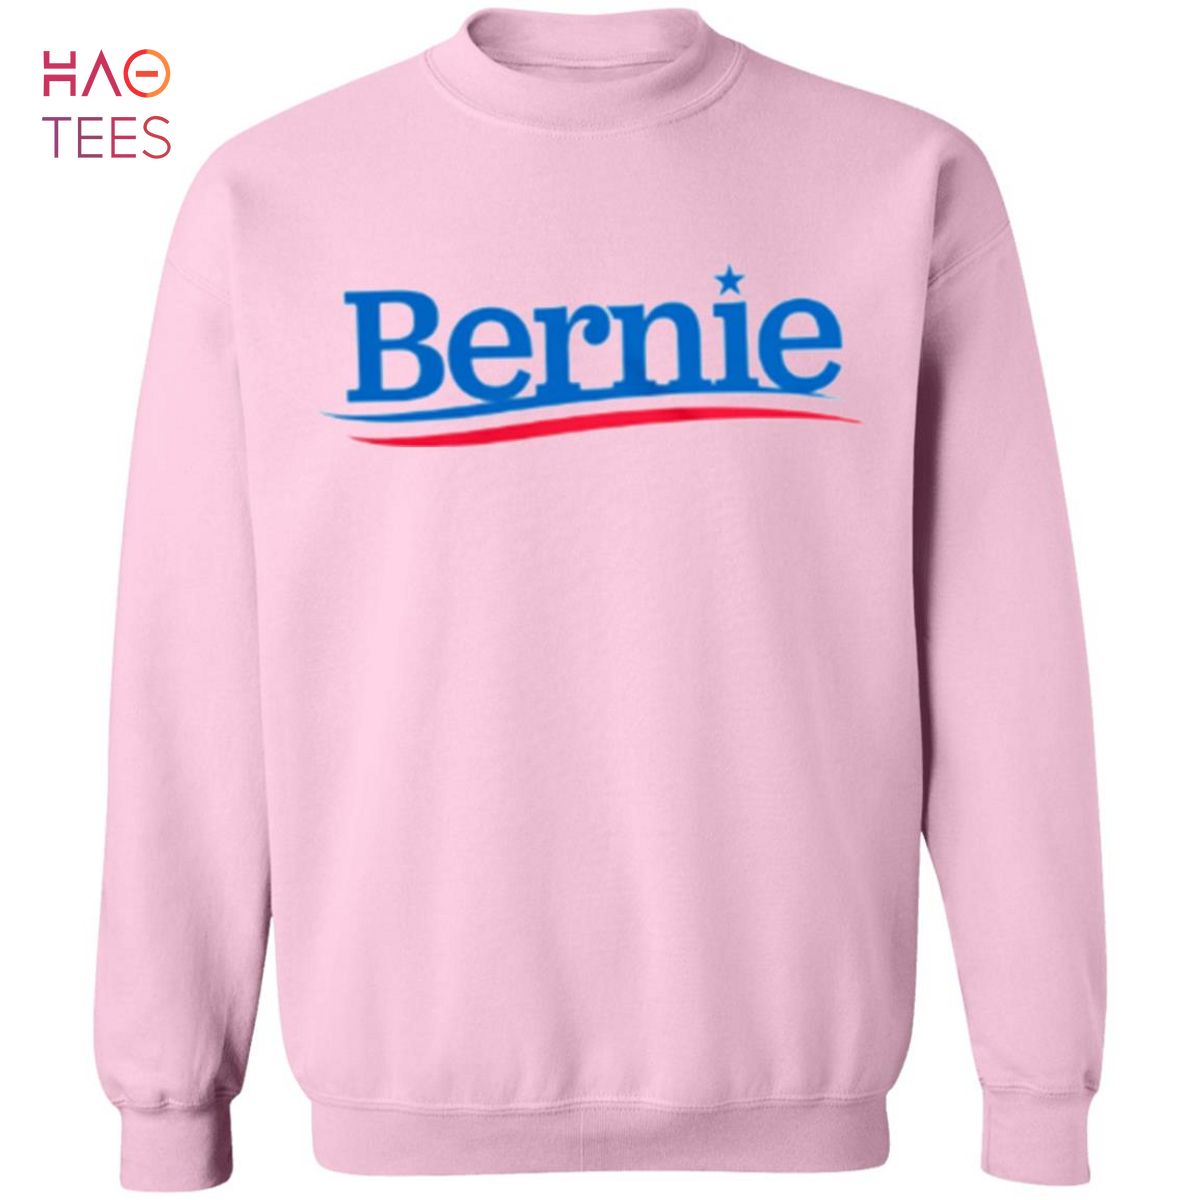 BEST Bernie Sanders Sweater White